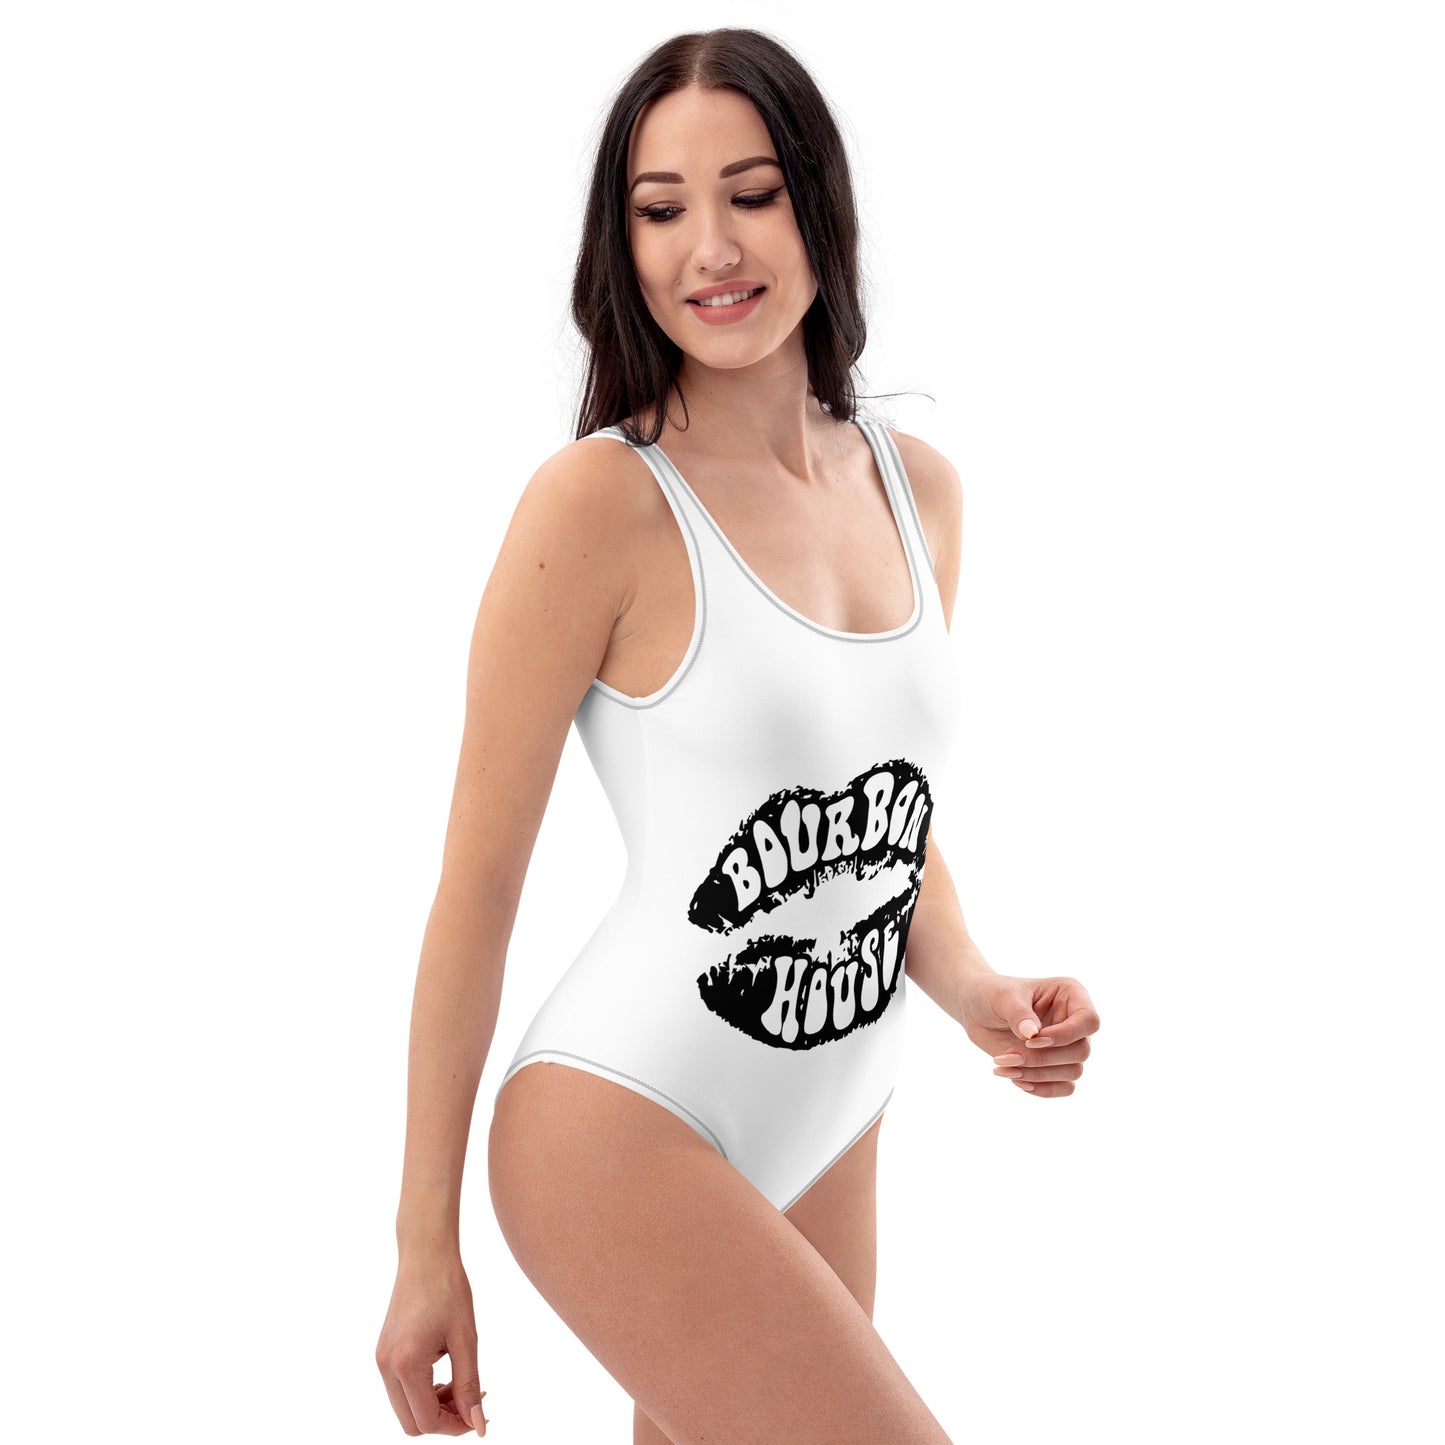 One-Piece Swimsuit